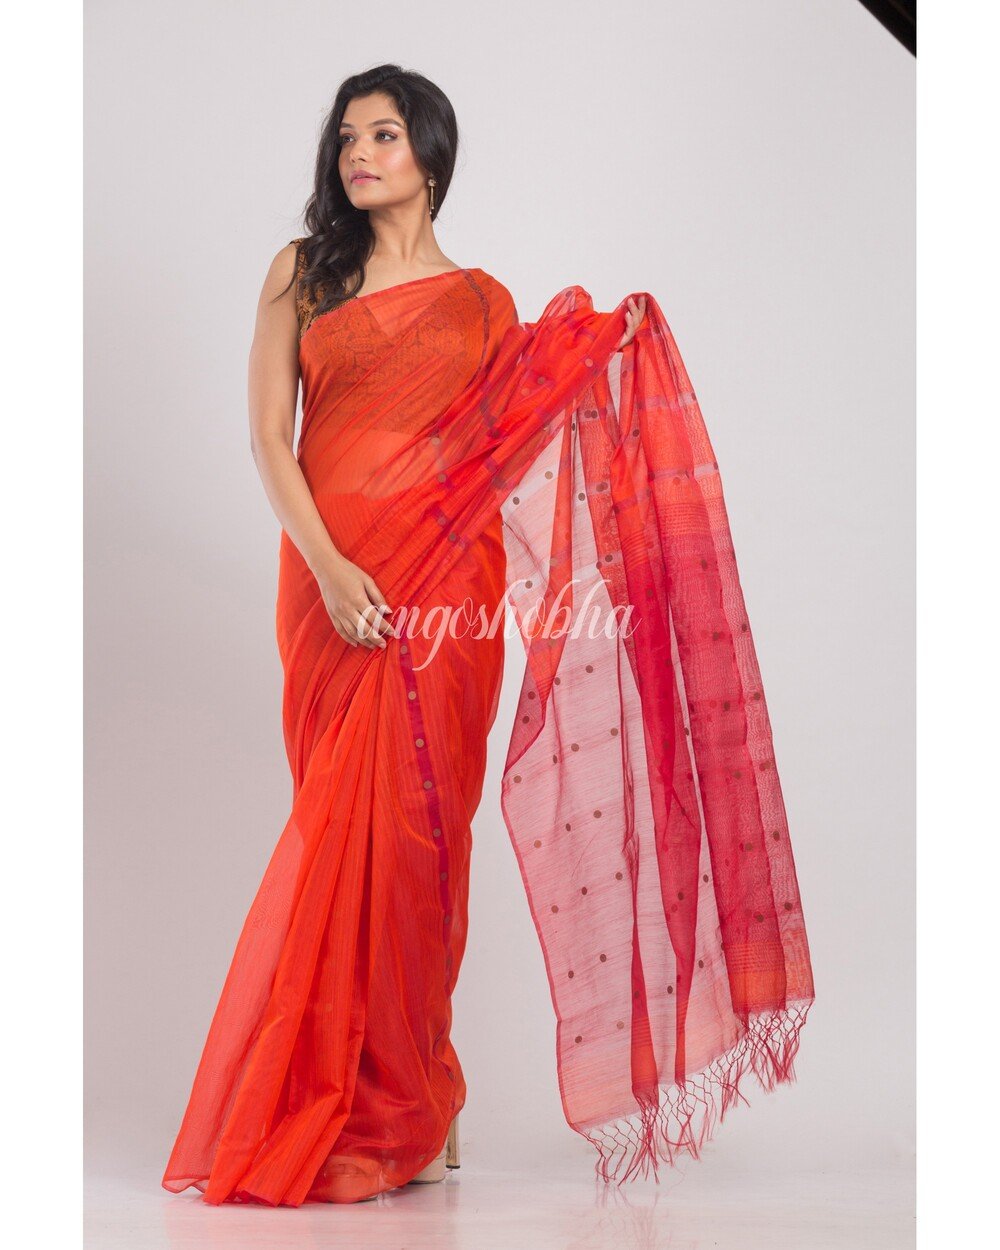 Women's Orange Cotton Silk Handloom Saree - Angoshobha